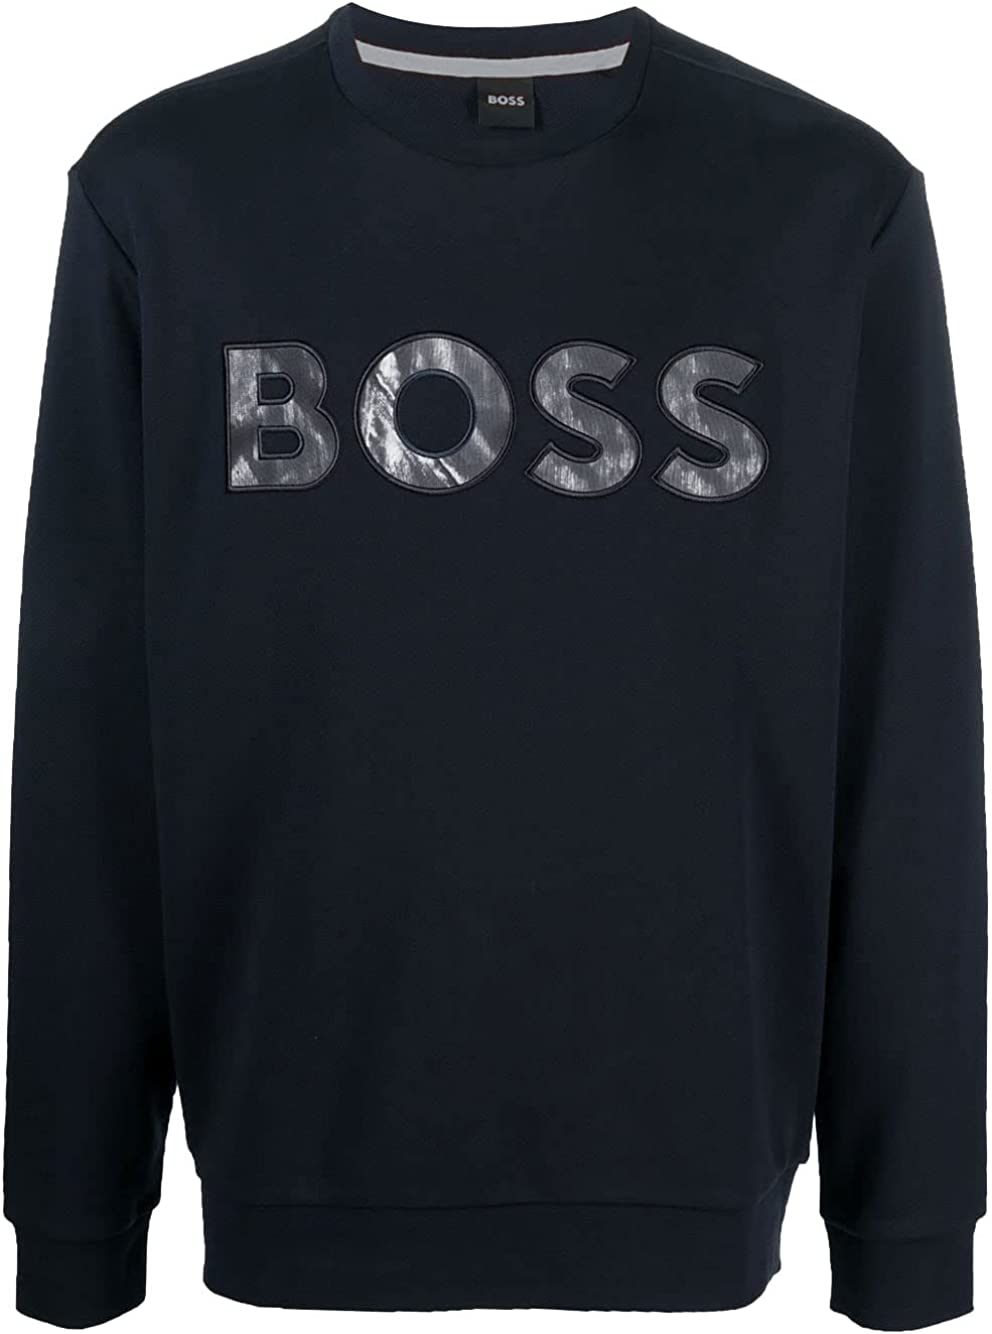 Hugo Boss Men's Navy Blue Weboss Crew Neck Logo Sweatshirt